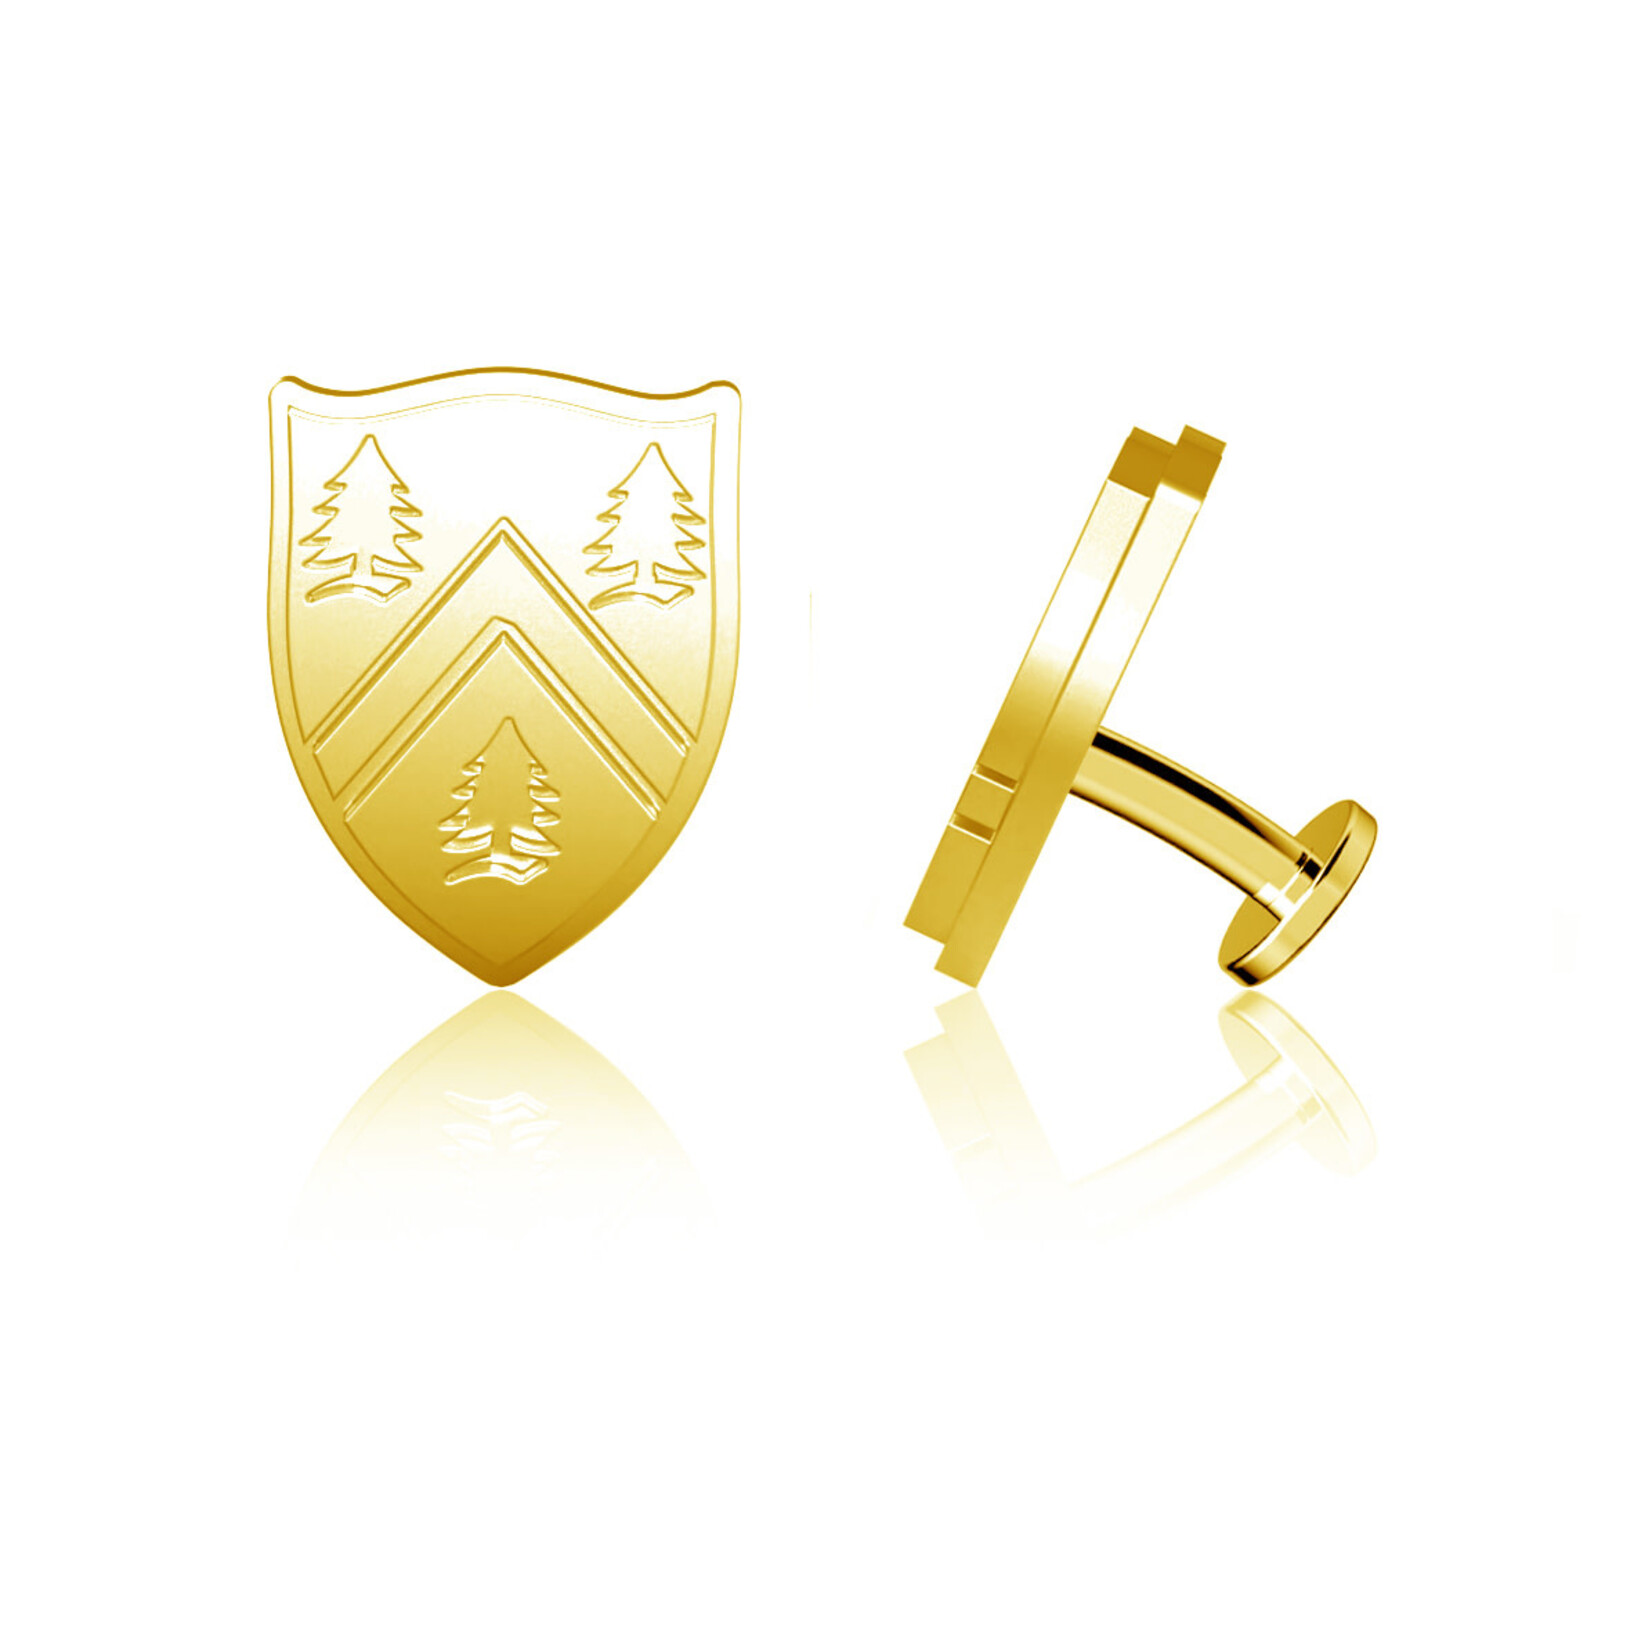 Dayna Designs Dayna Designs Cuff Links Sterling Silver/Gold Plated Shield